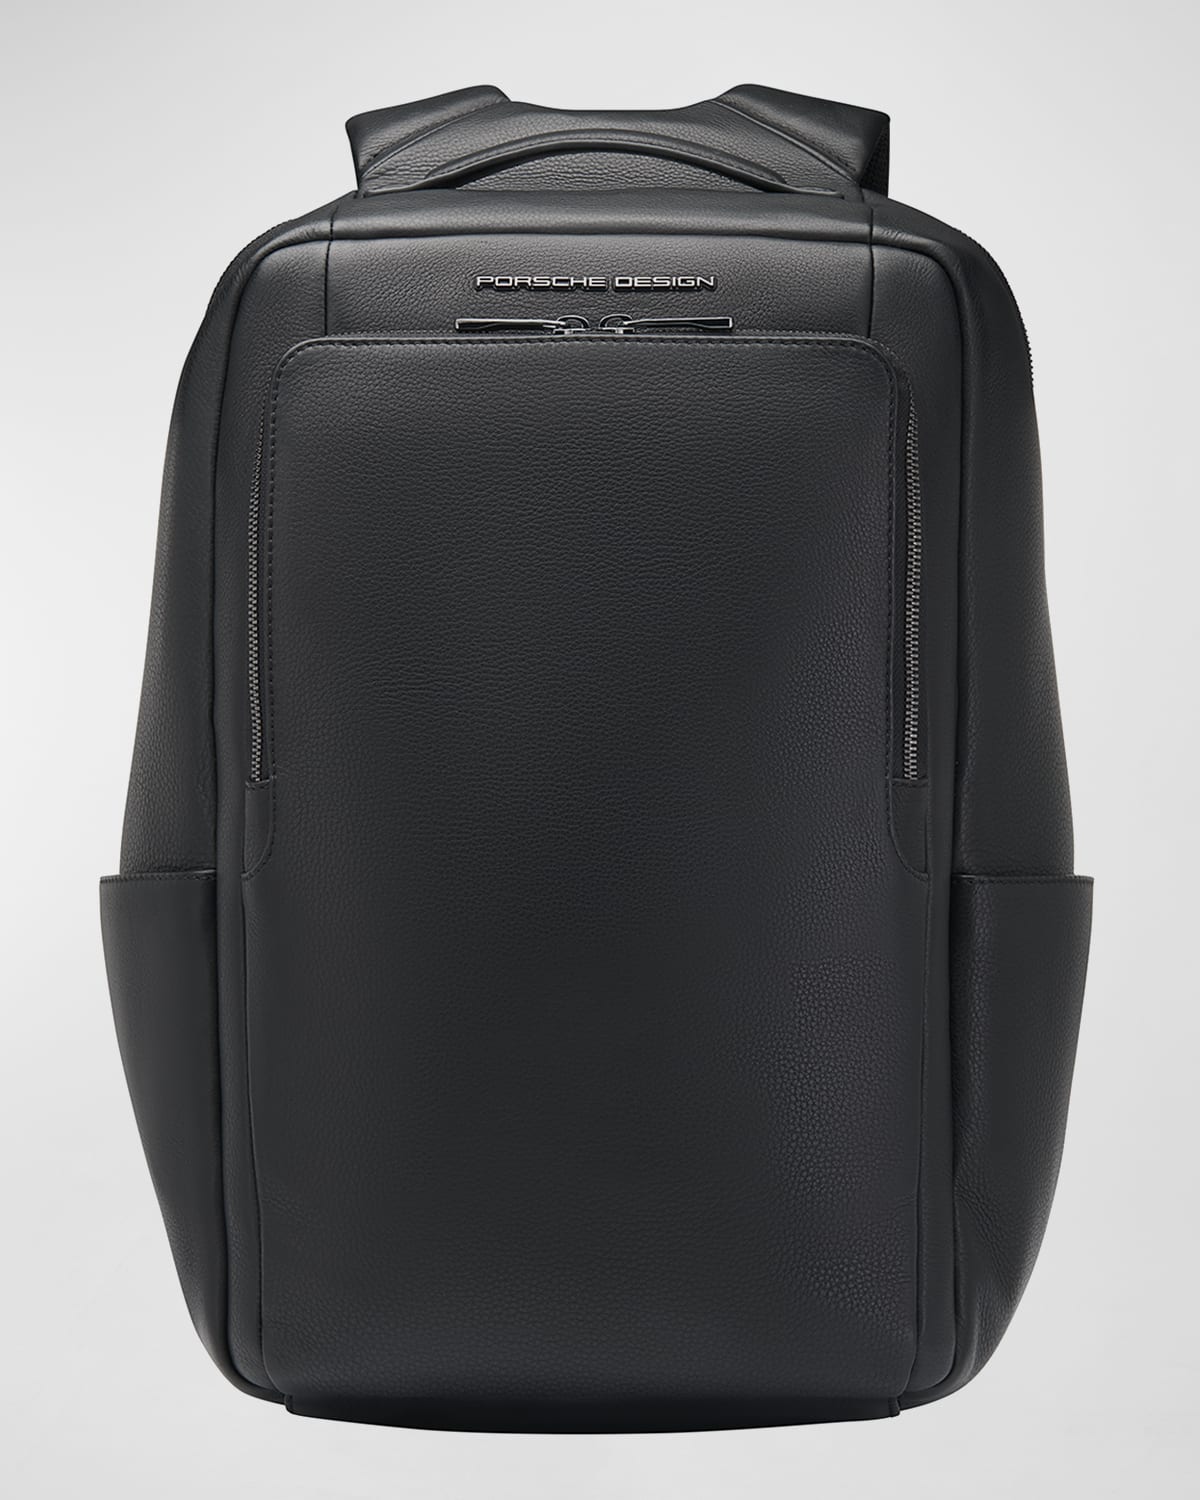 Porsche Design Roadster Leather Medium Backpack